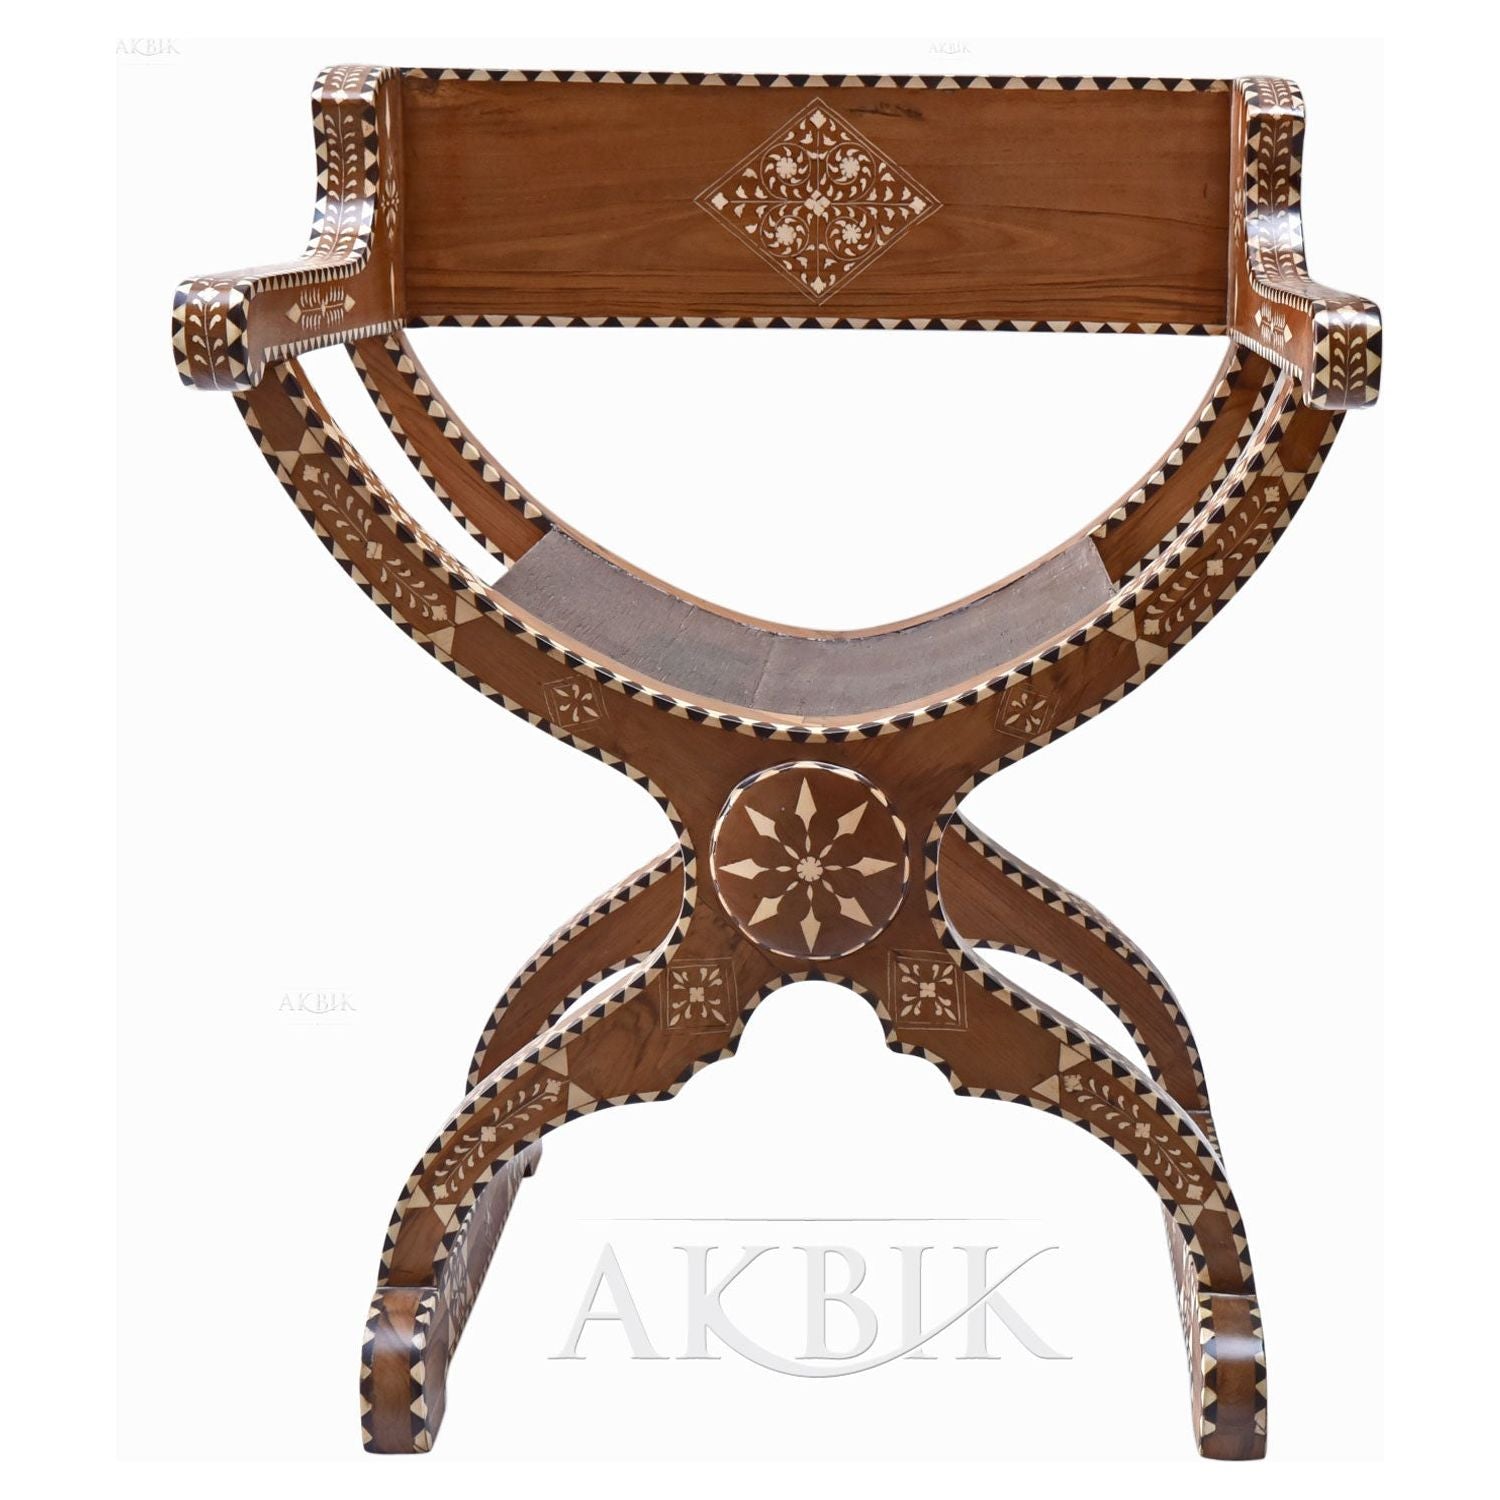 SPANISH BAROQUE CHAIR - AKBIK Furniture & Design